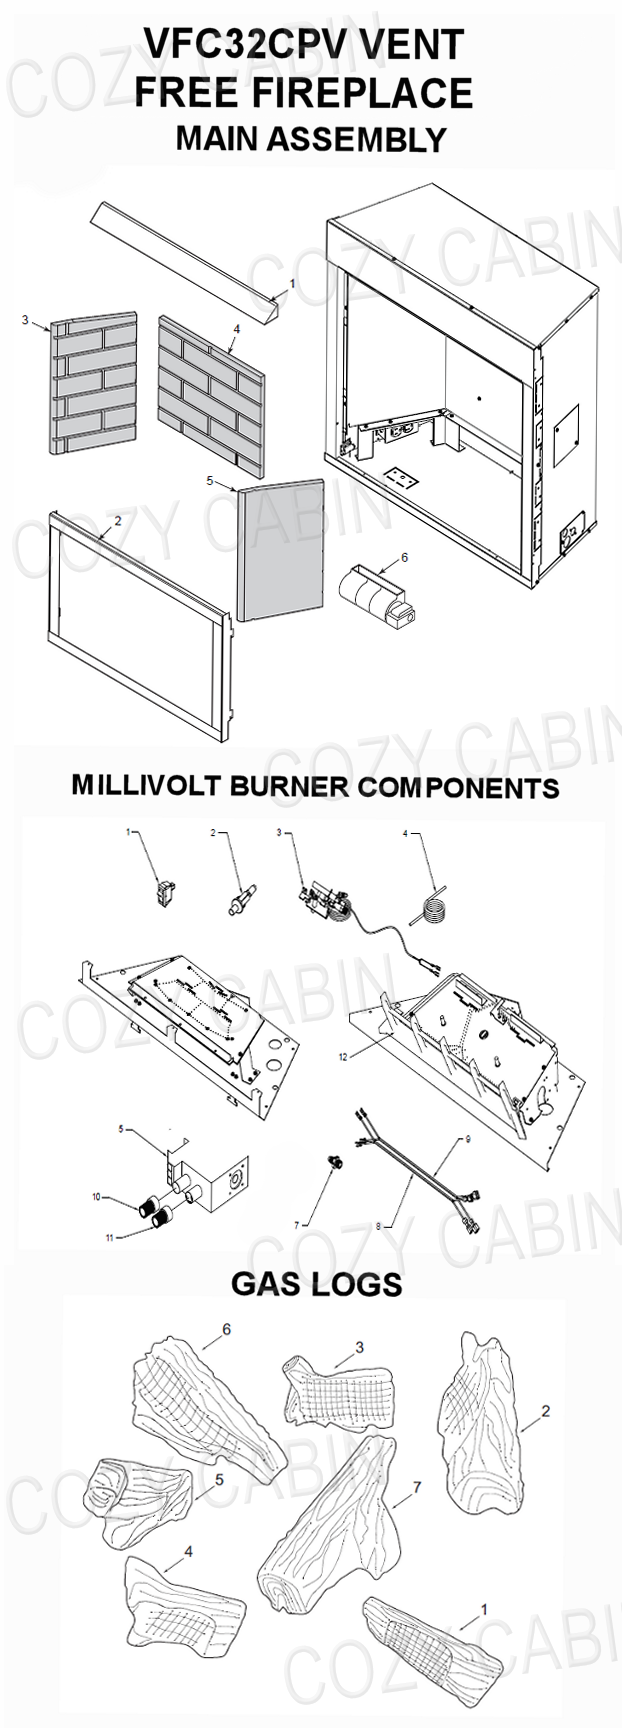 Monessen Vent Free LP Gas Fireplace System with Millivolt Burner (VFC32CPV) #VFC32CPV